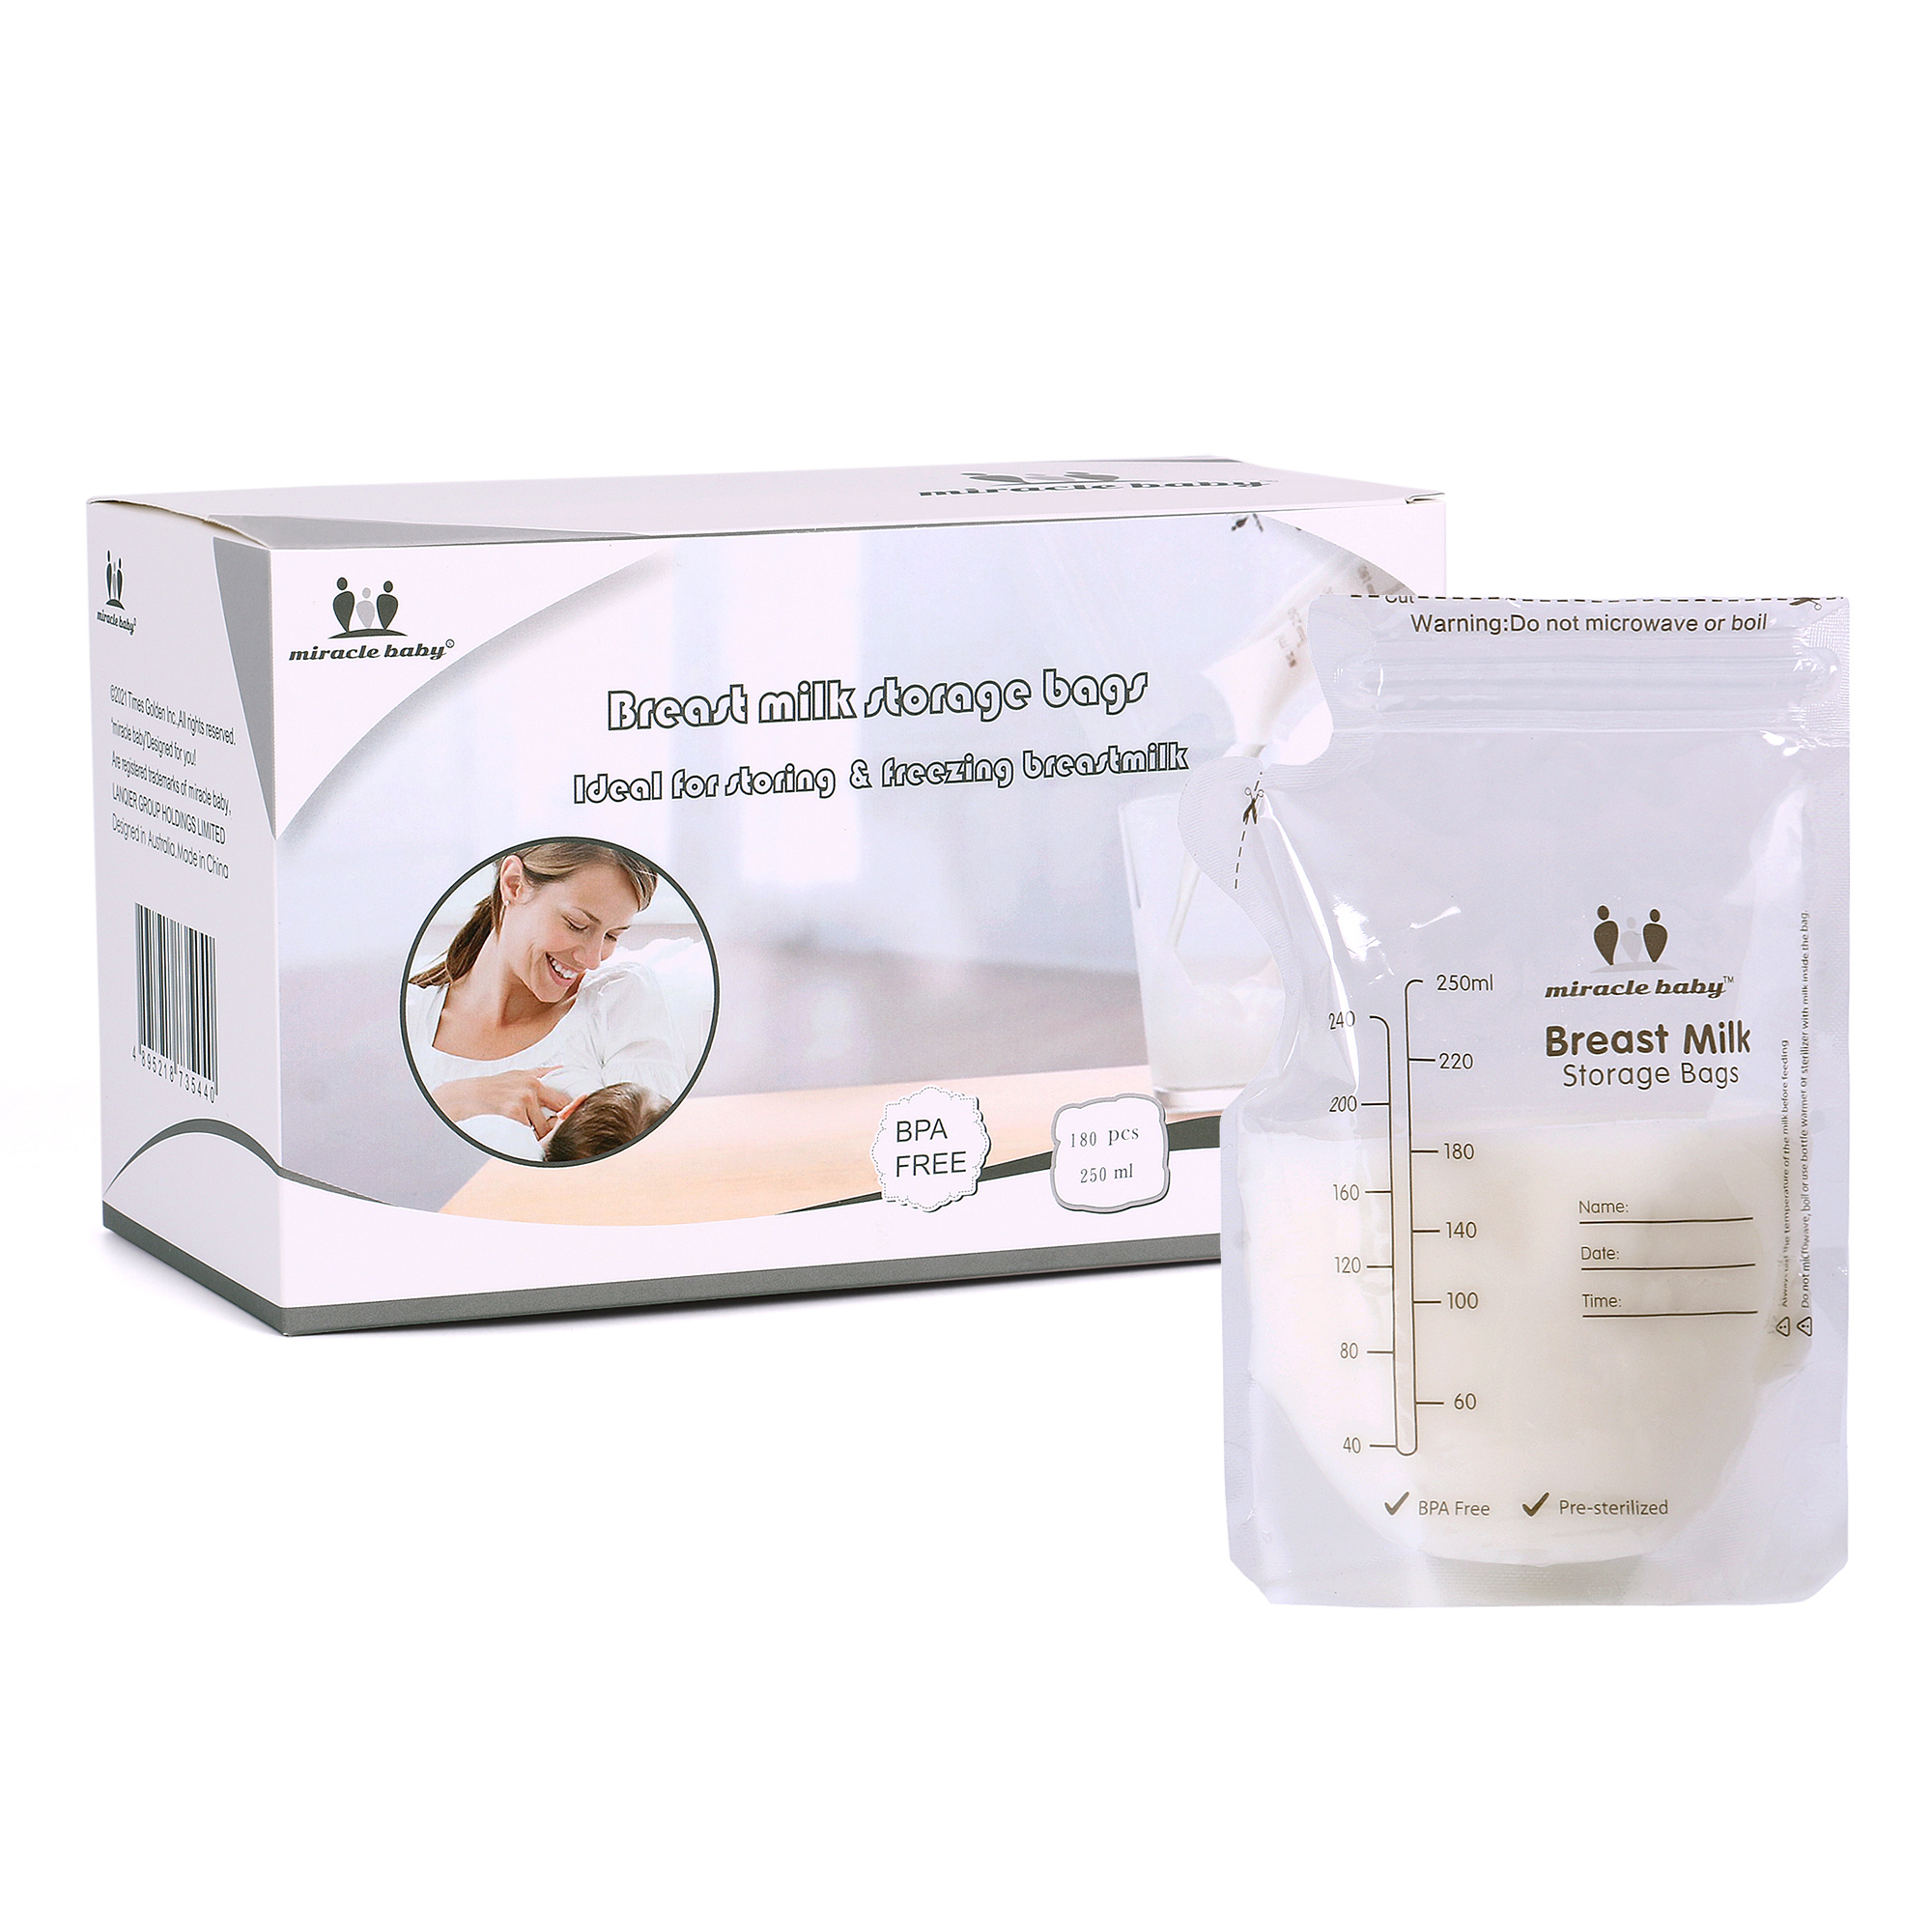 Advanced Breast Milk Storage Bags